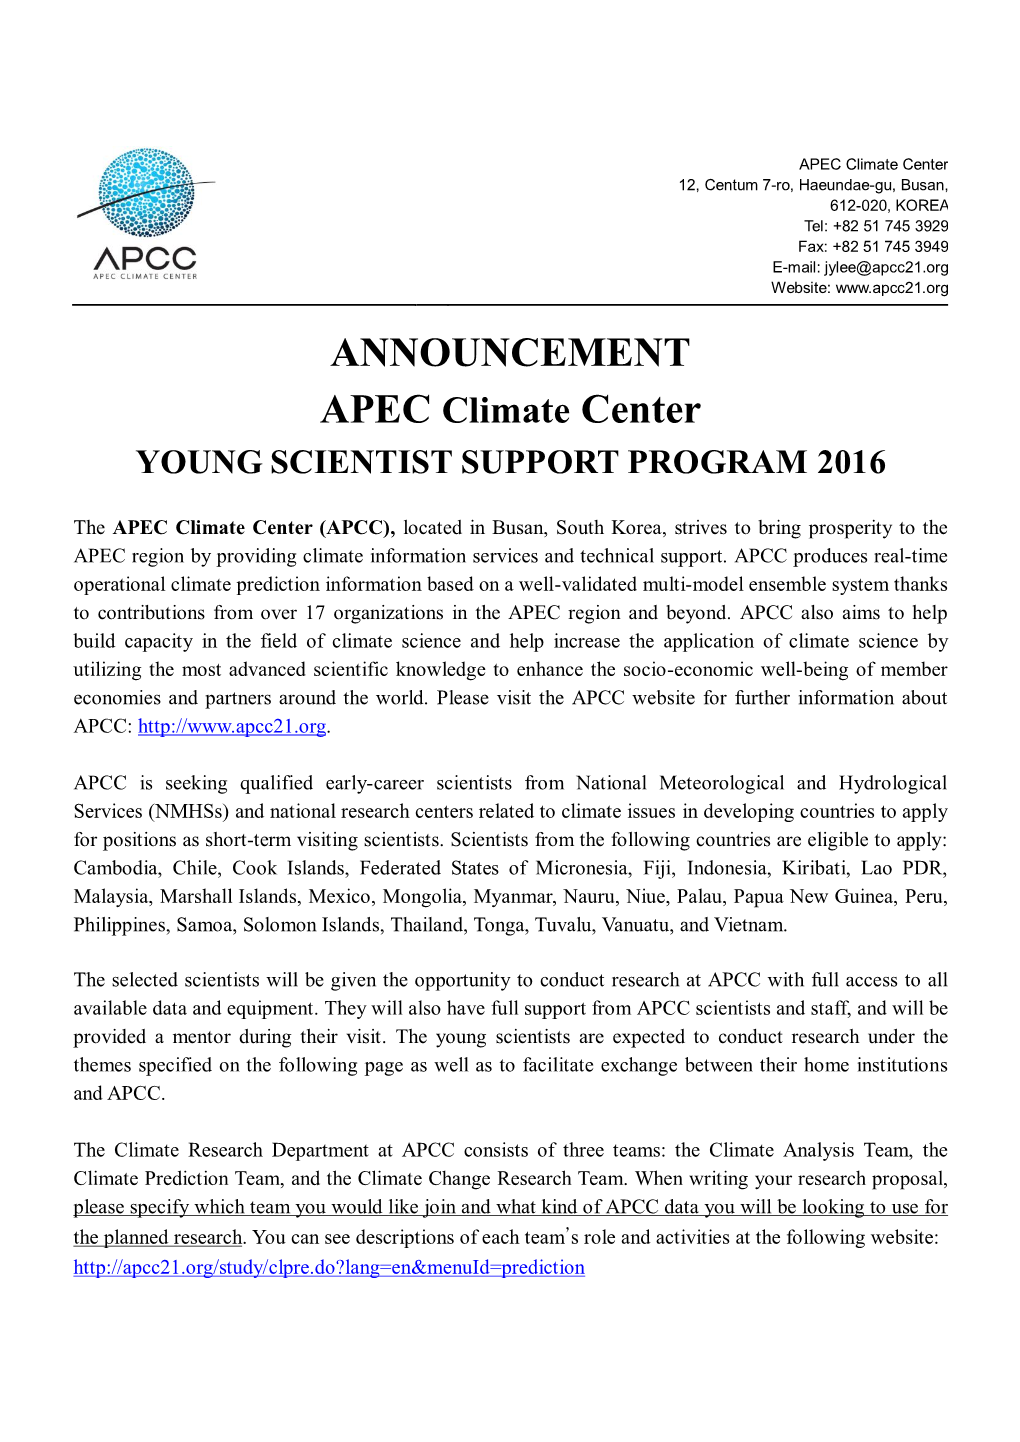 ANNOUNCEMENT APEC Climate Center YOUNG SCIENTIST SUPPORT PROGRAM 2016